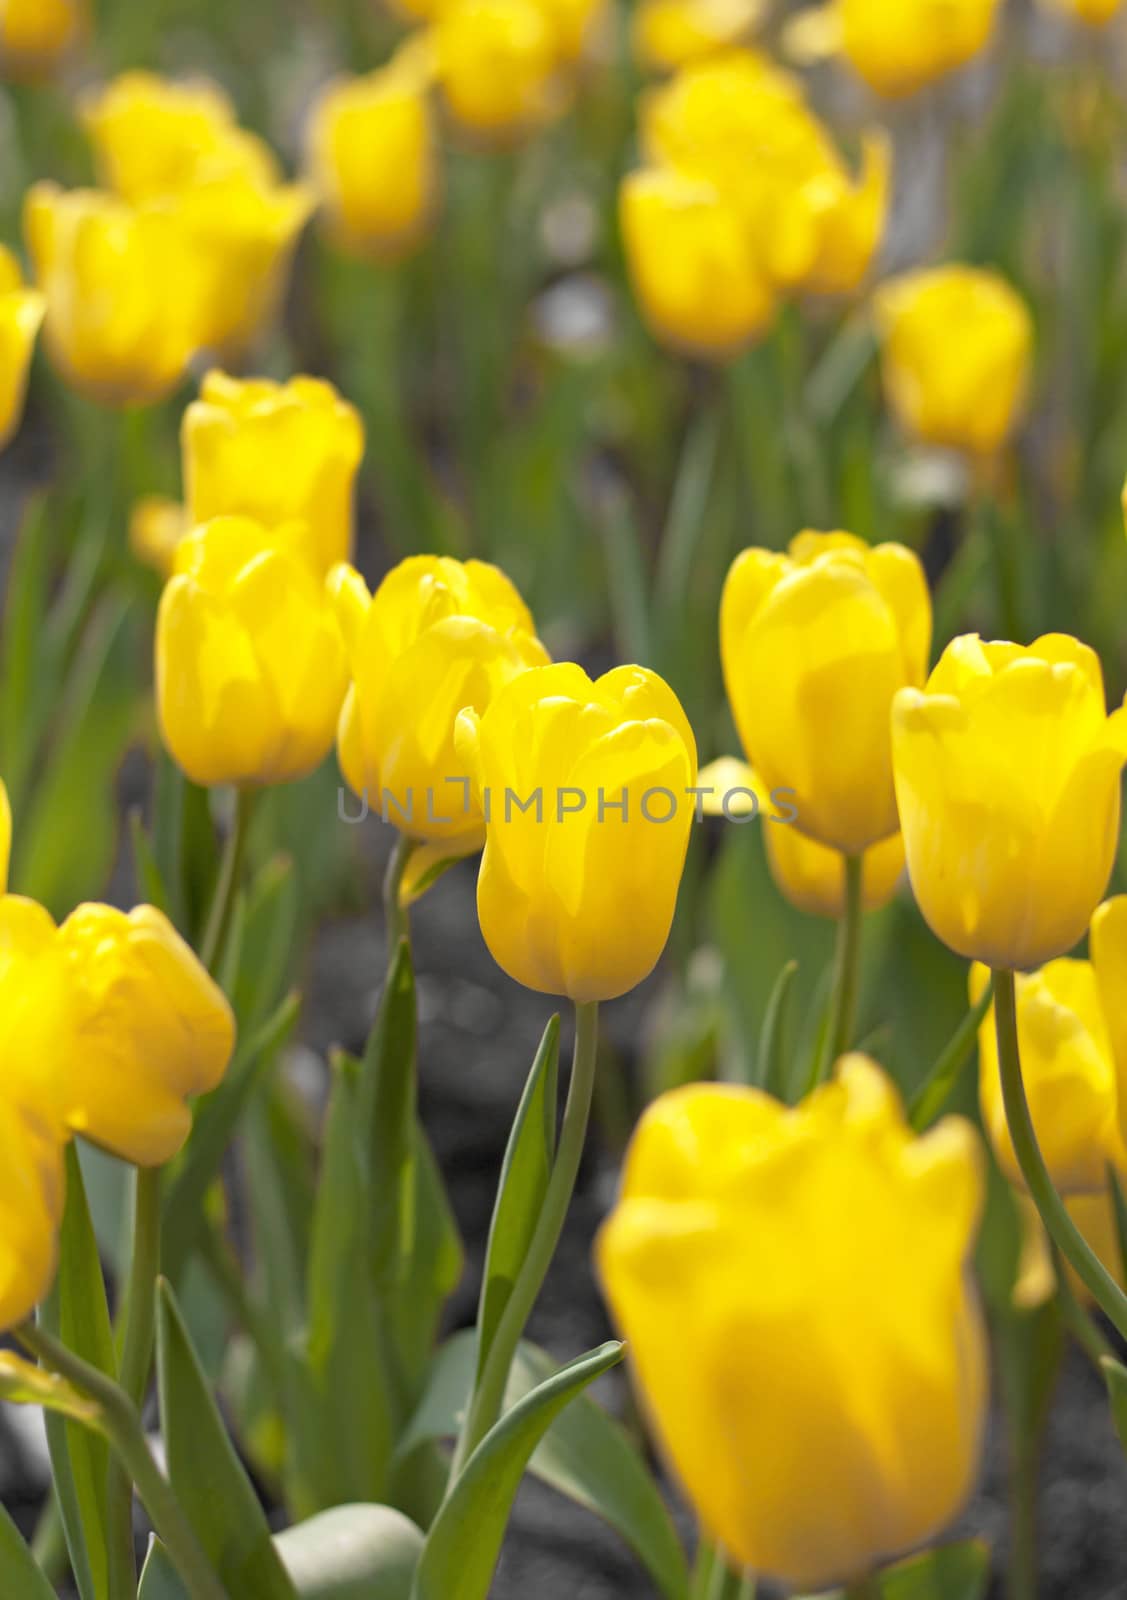 Yellow tulips bloom in garden fresh green leaf.